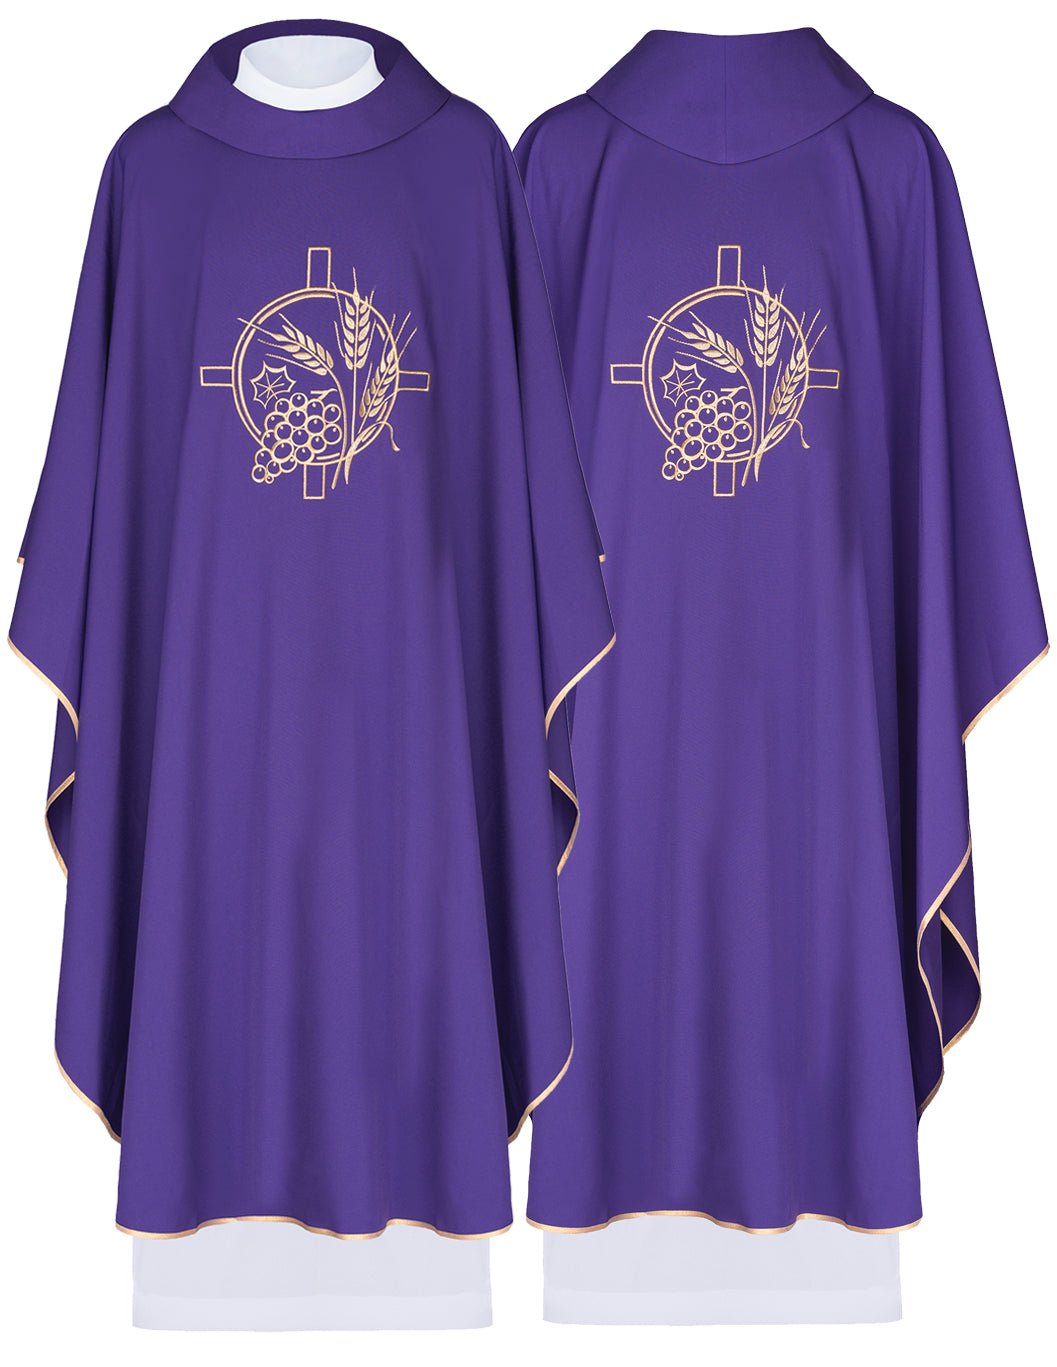 Fioletowy ornat z eucharystycznym wzorem